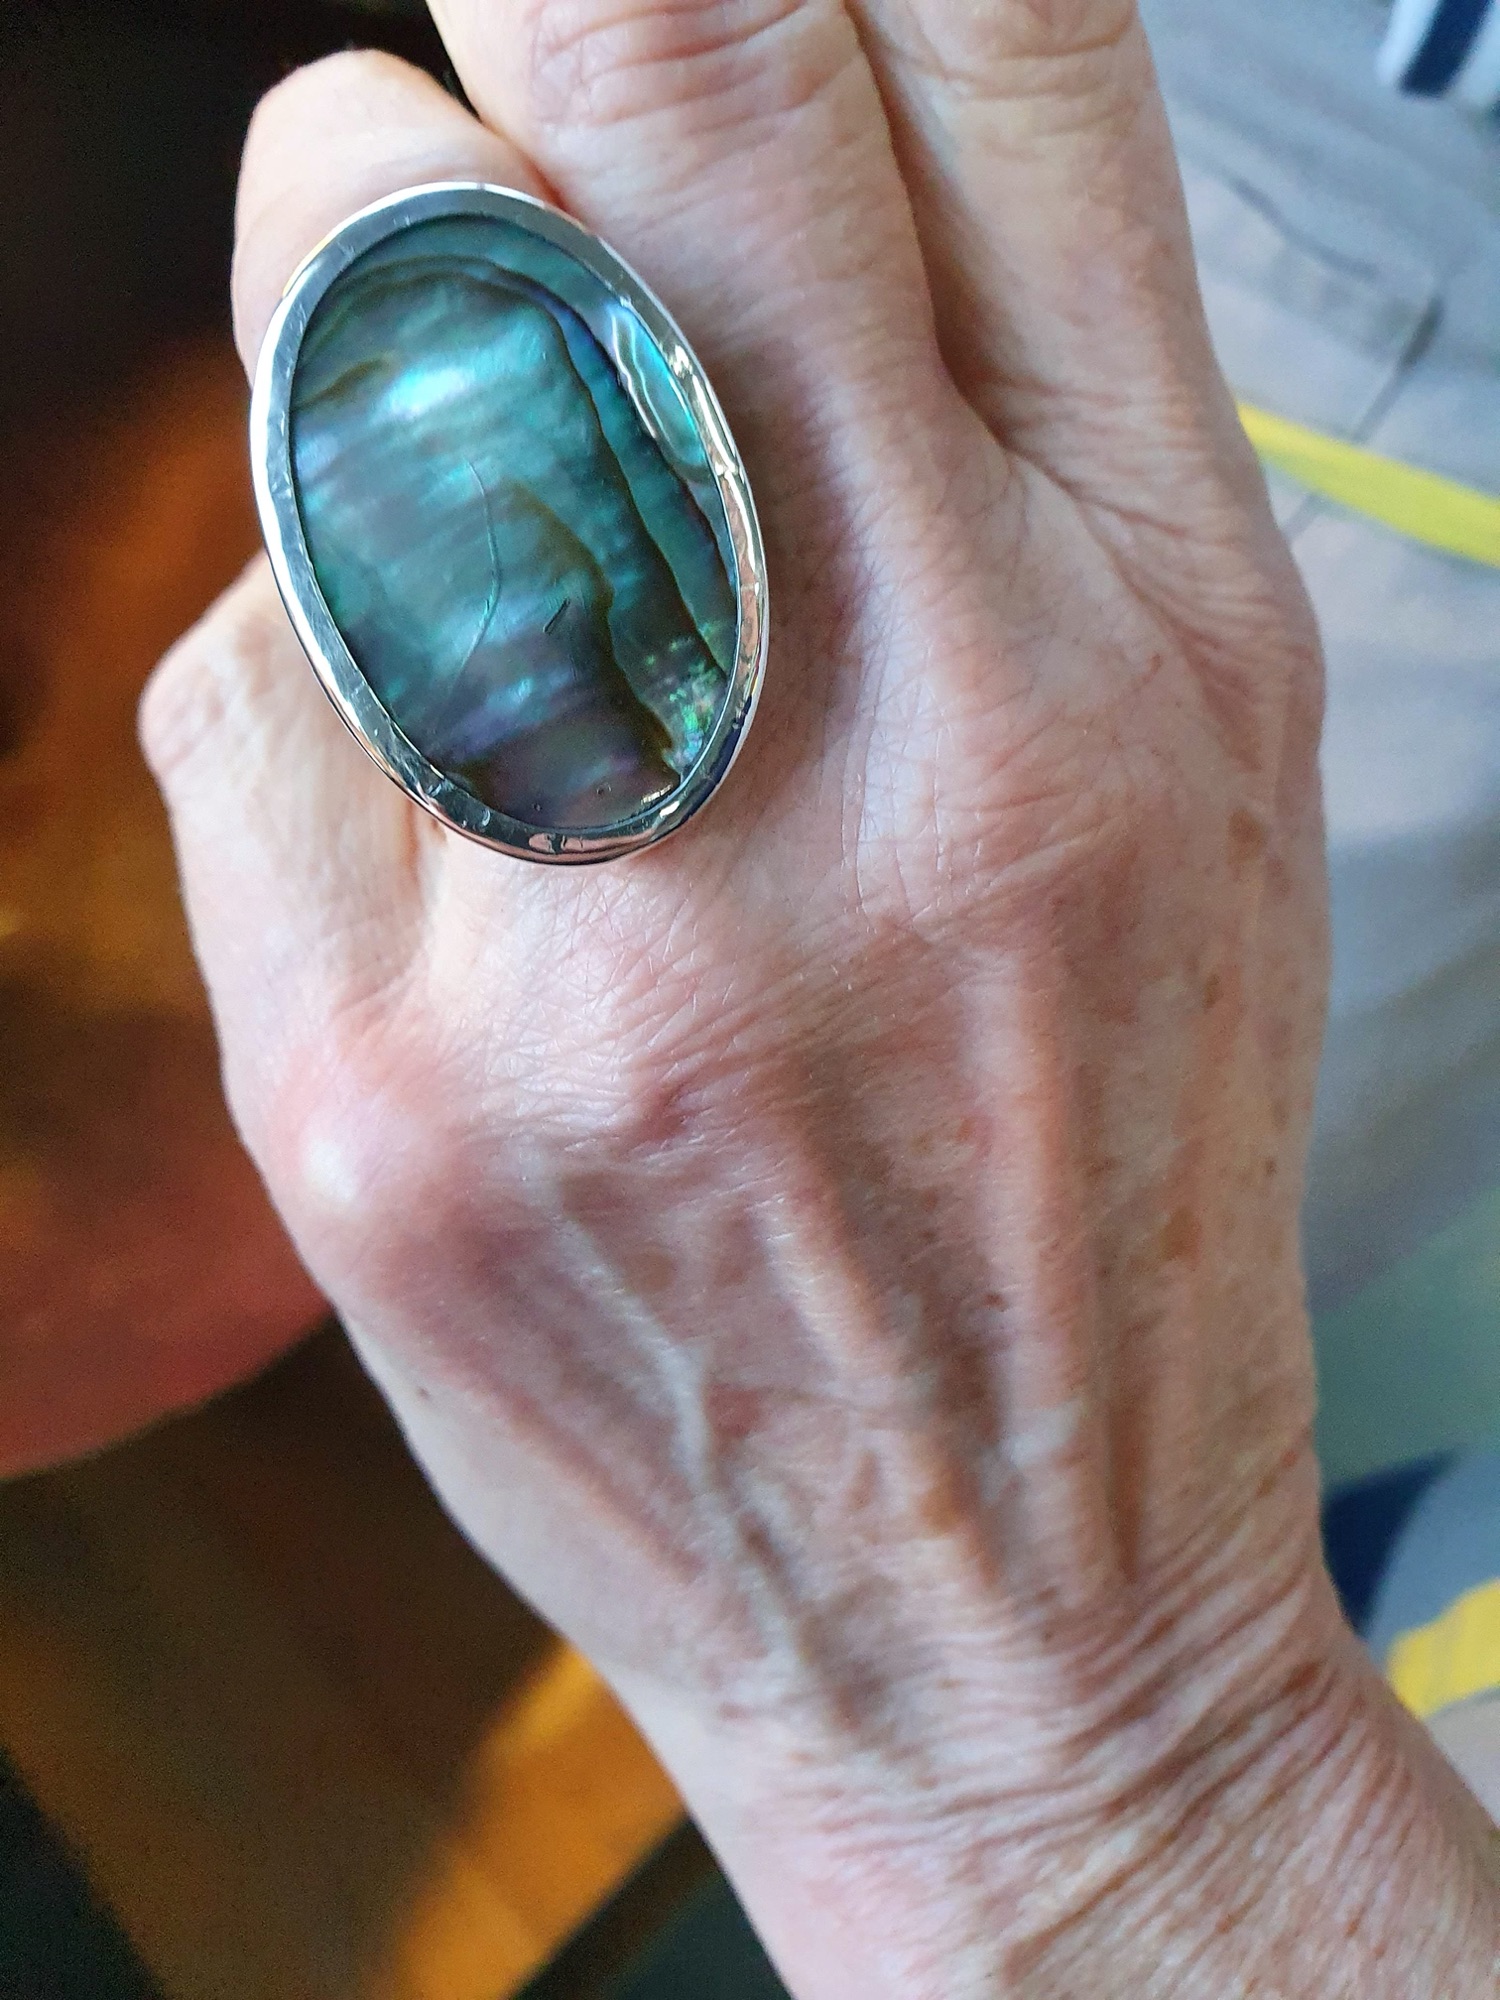 Stone setting ring workshop, beautiful amethyst ring